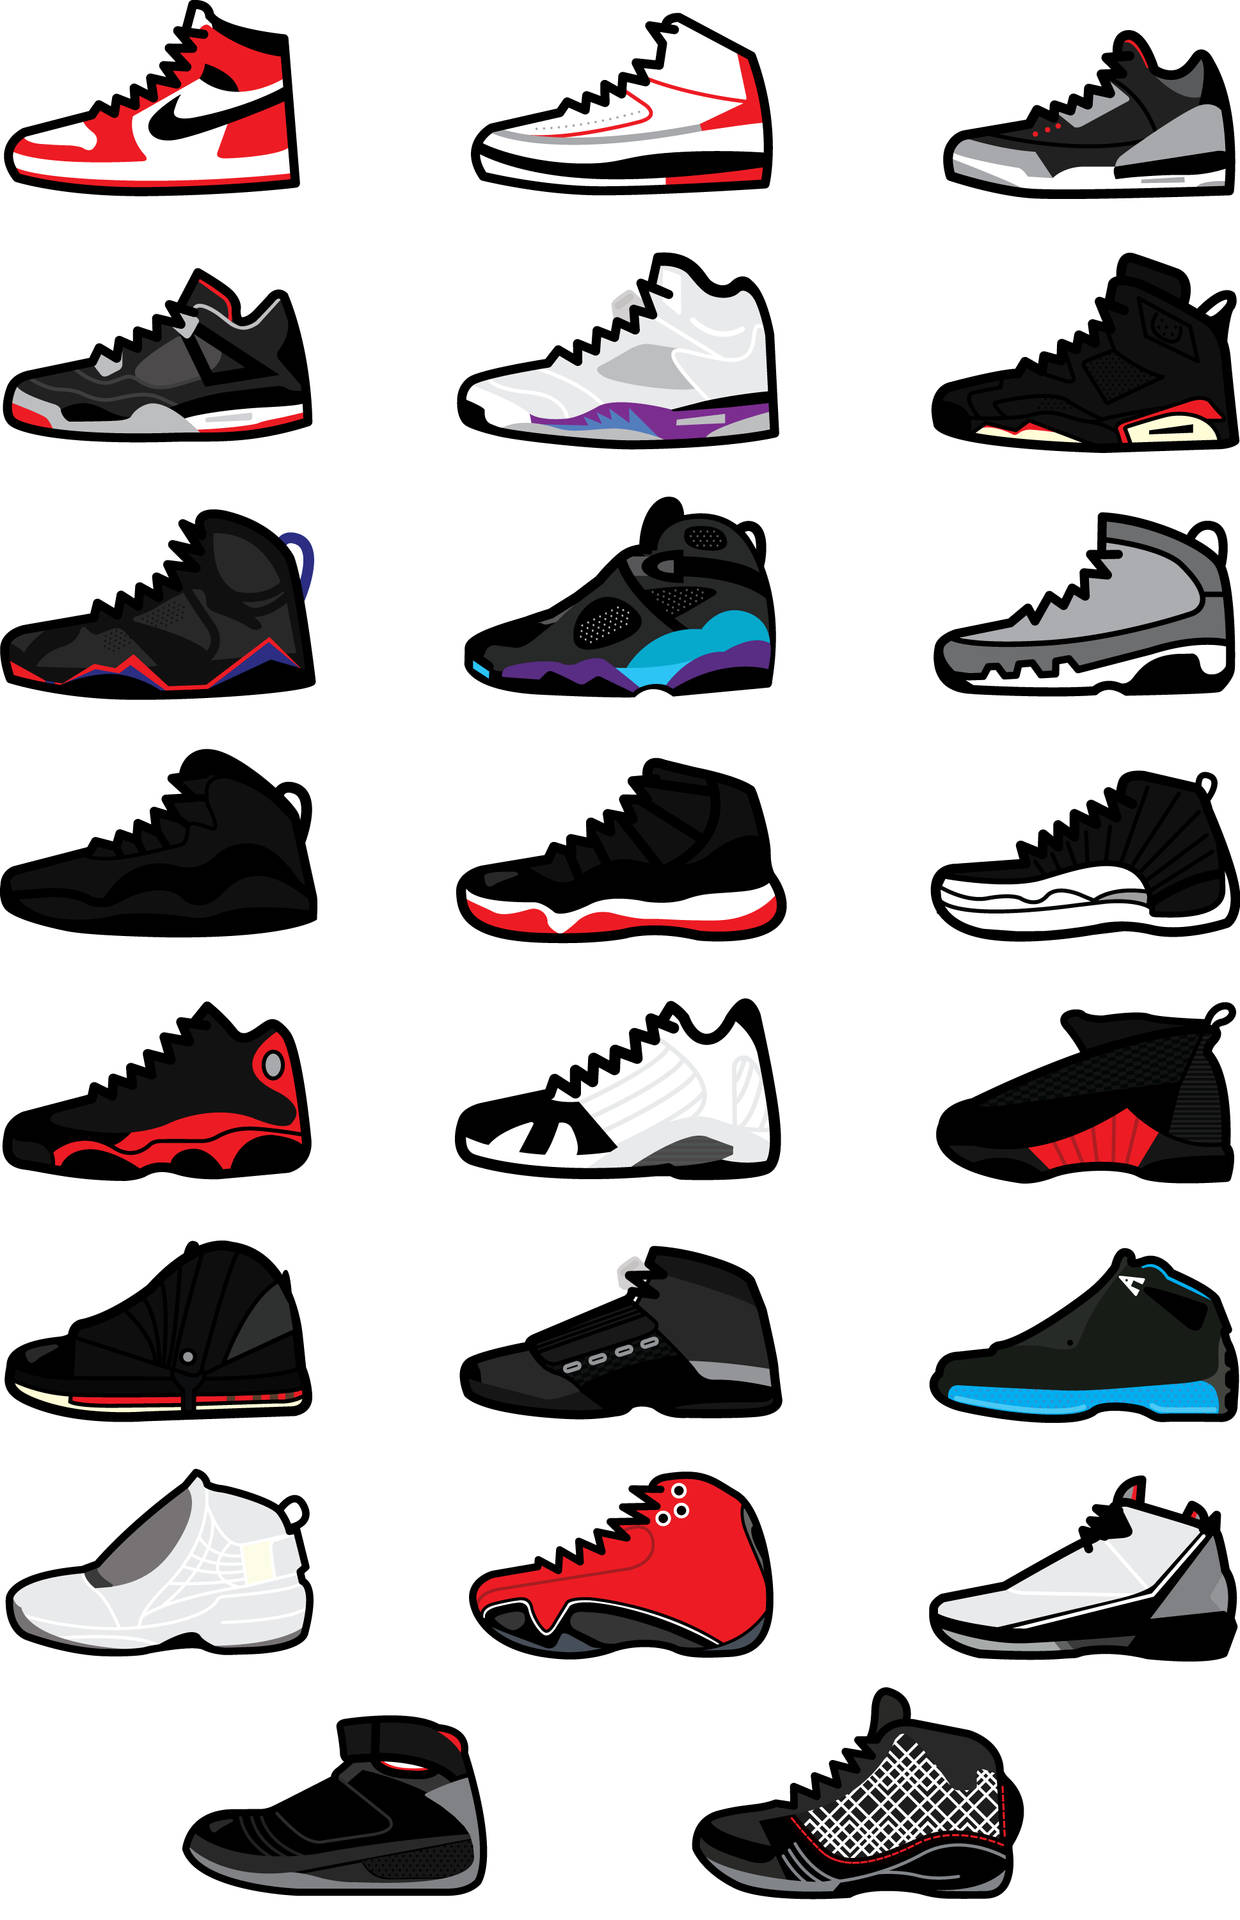 Jordan Shoes Bilder